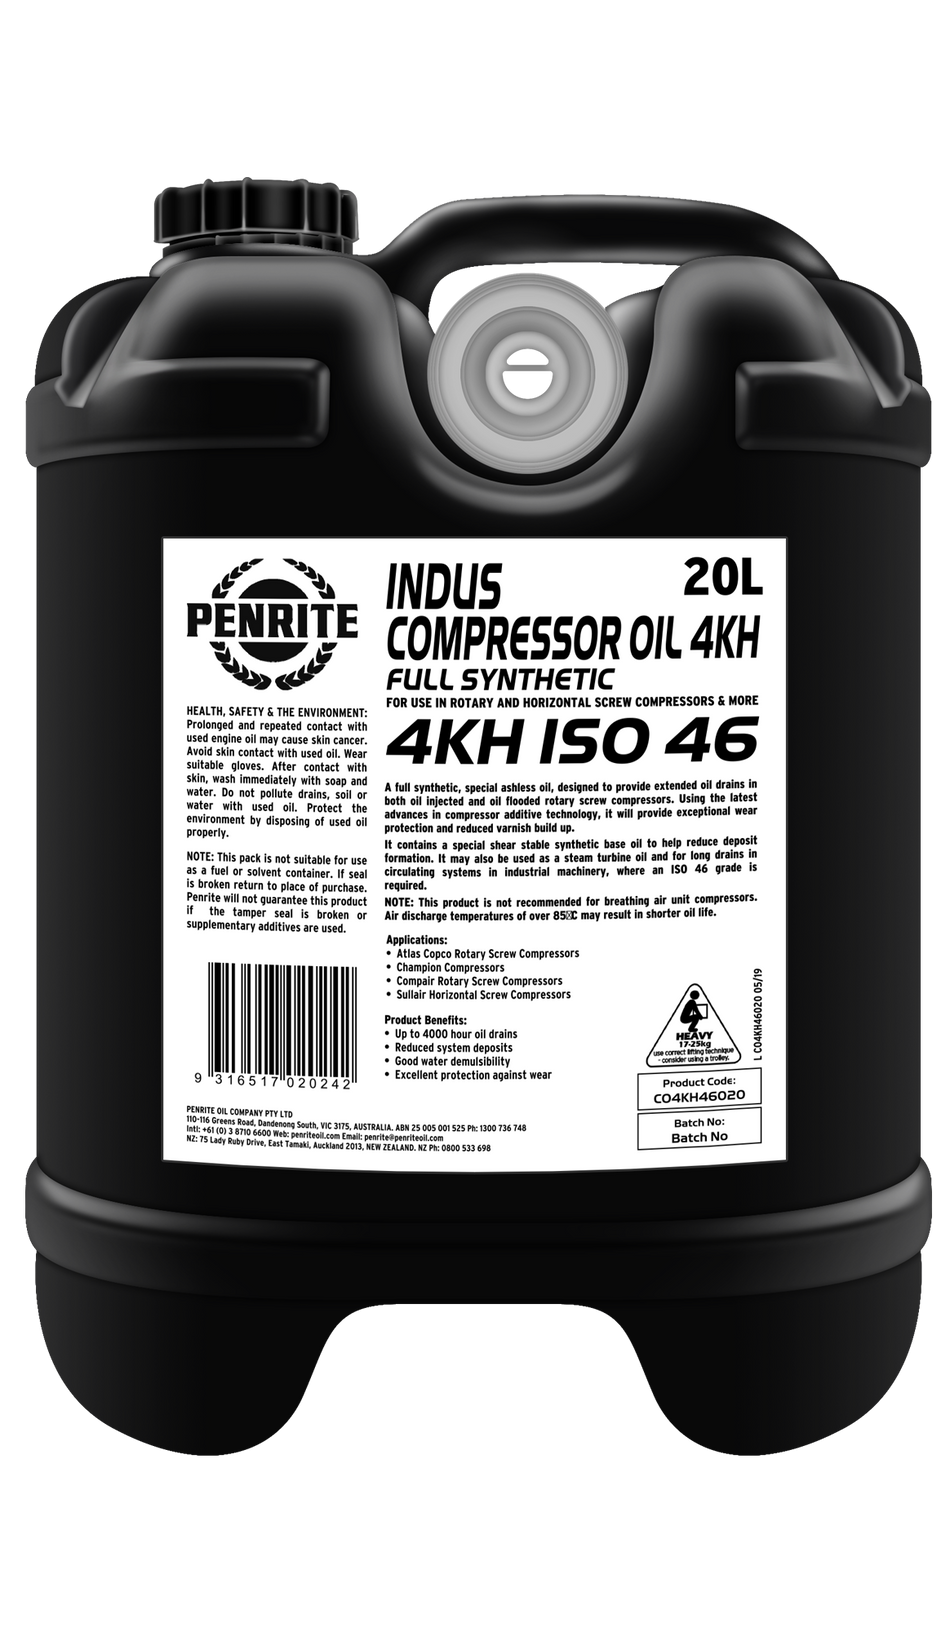 Penrite Indus Compressor Oil 4Kh Iso 46 20L